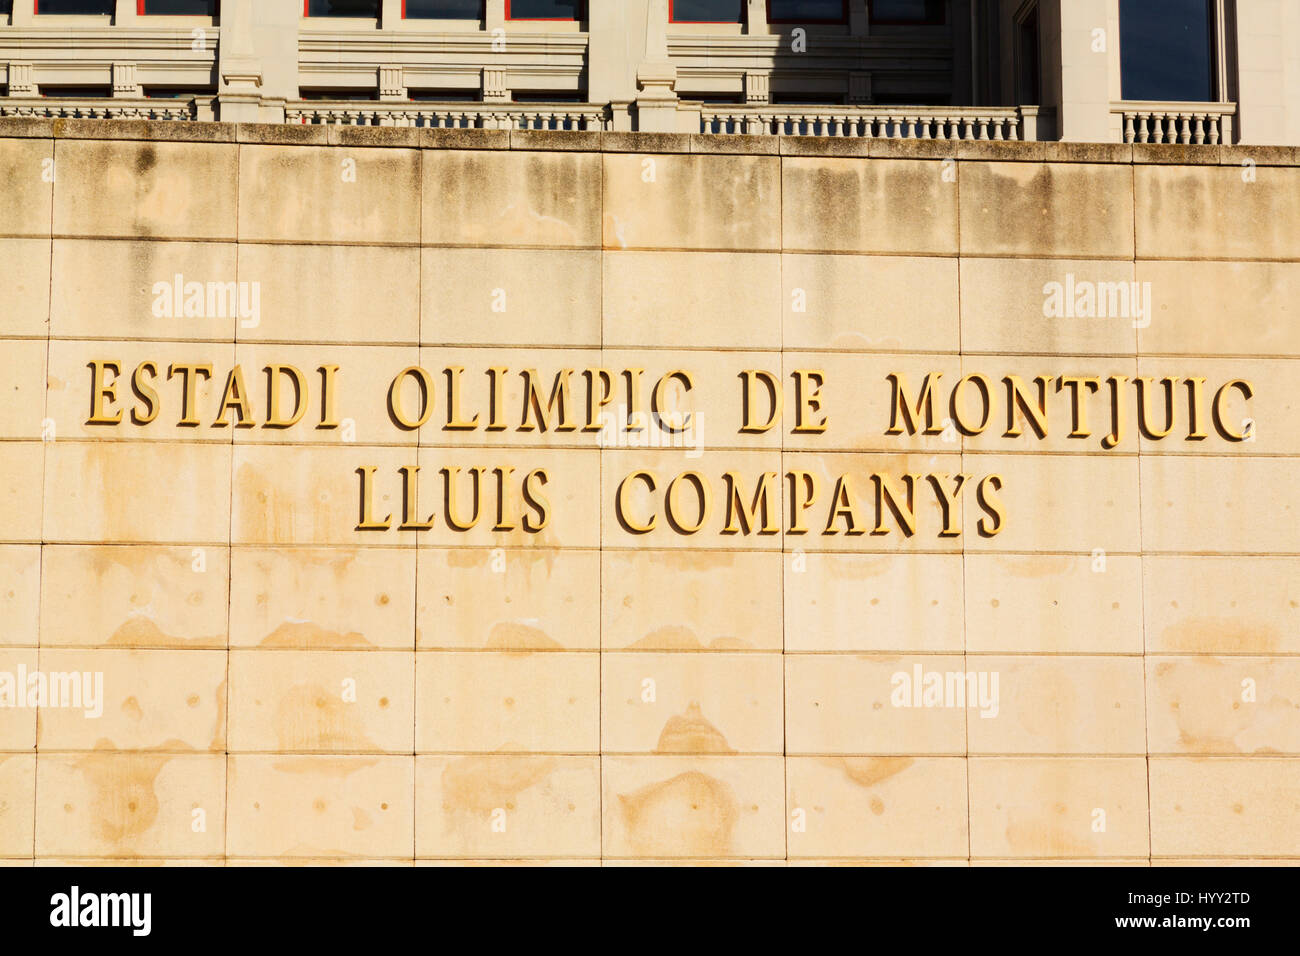 Estadi Olimpic de Monjuic Lluis Companys, 1992 Olympics venue, Barcelona, Catalunya, Spain Stock Photo